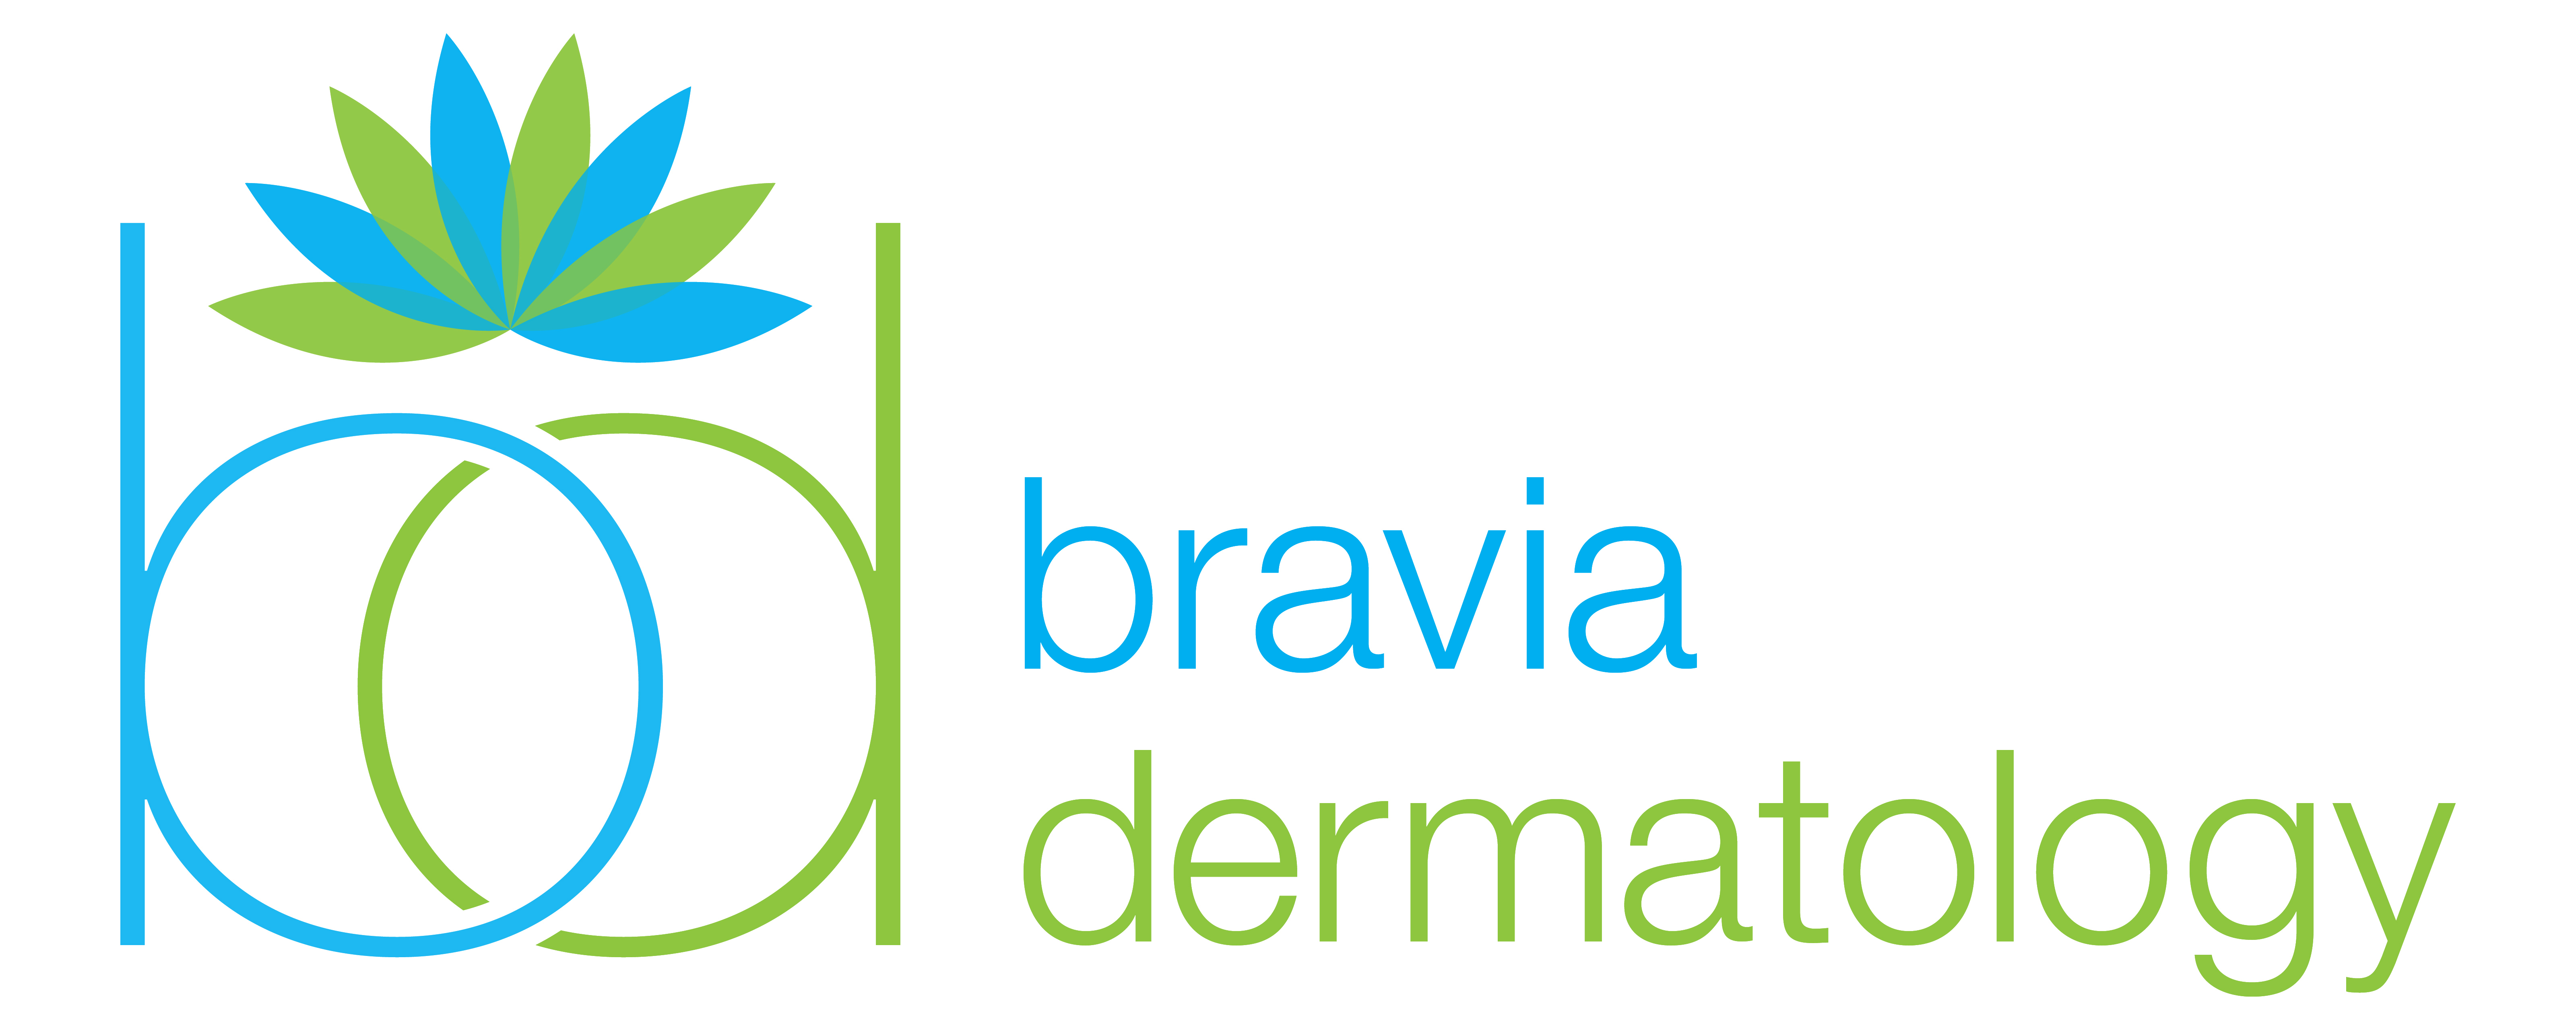 Bravia Dermatology Online Shop